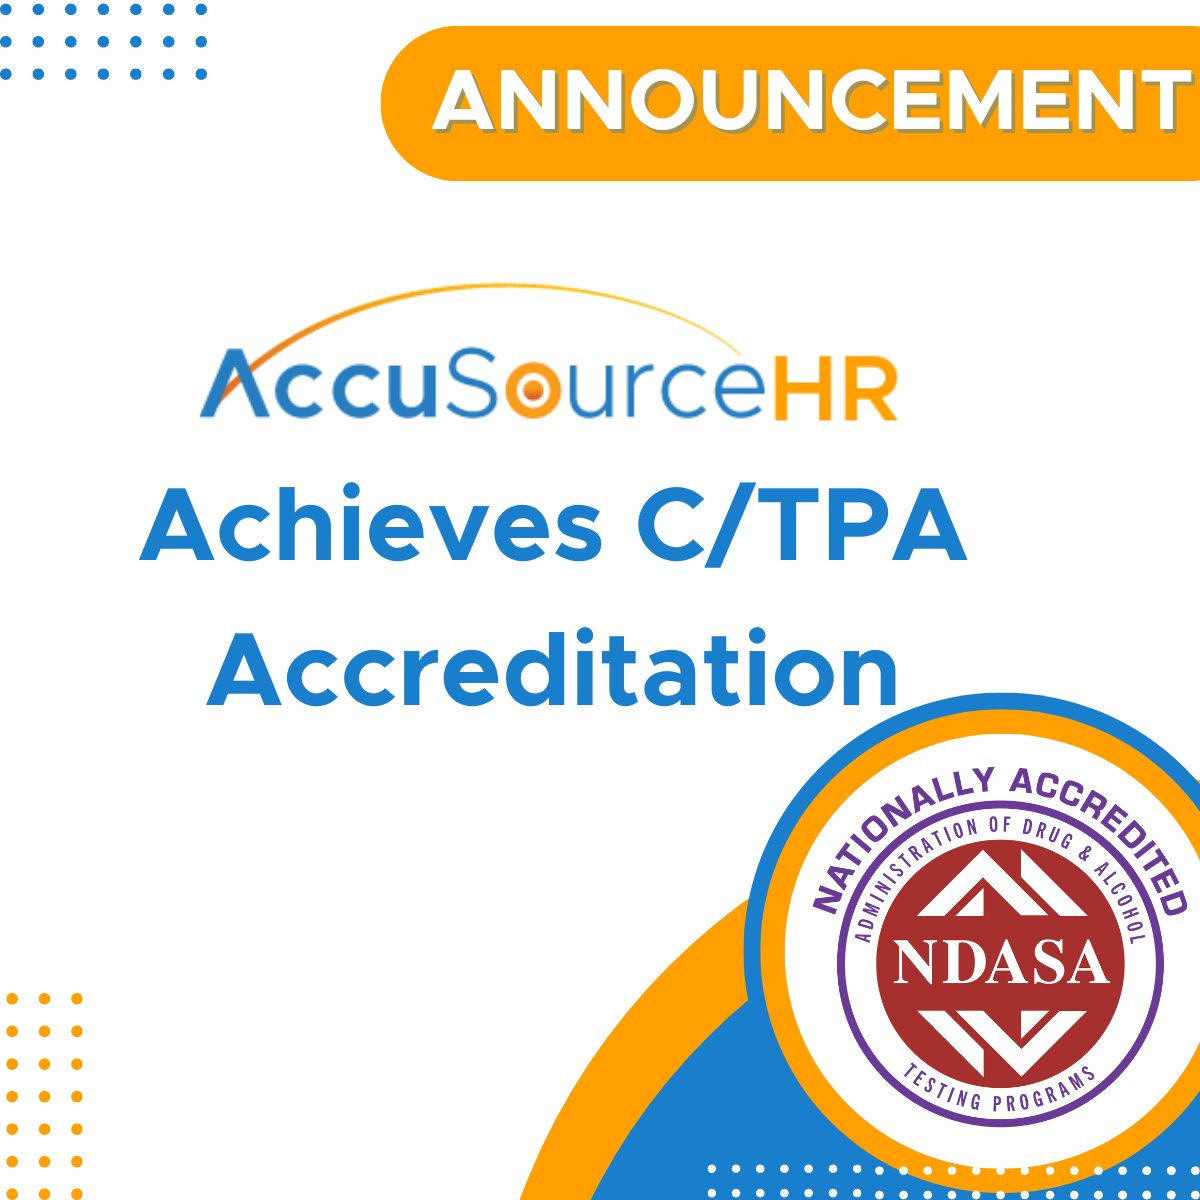 AccuSourceHR announces C/TPA Accreditation. Click to read our press release bit.ly/49sPCaI #BackgroundScreening #DrugScreening #C/TPA #Accreditation #NDASA #HR #DOTRandomScreening